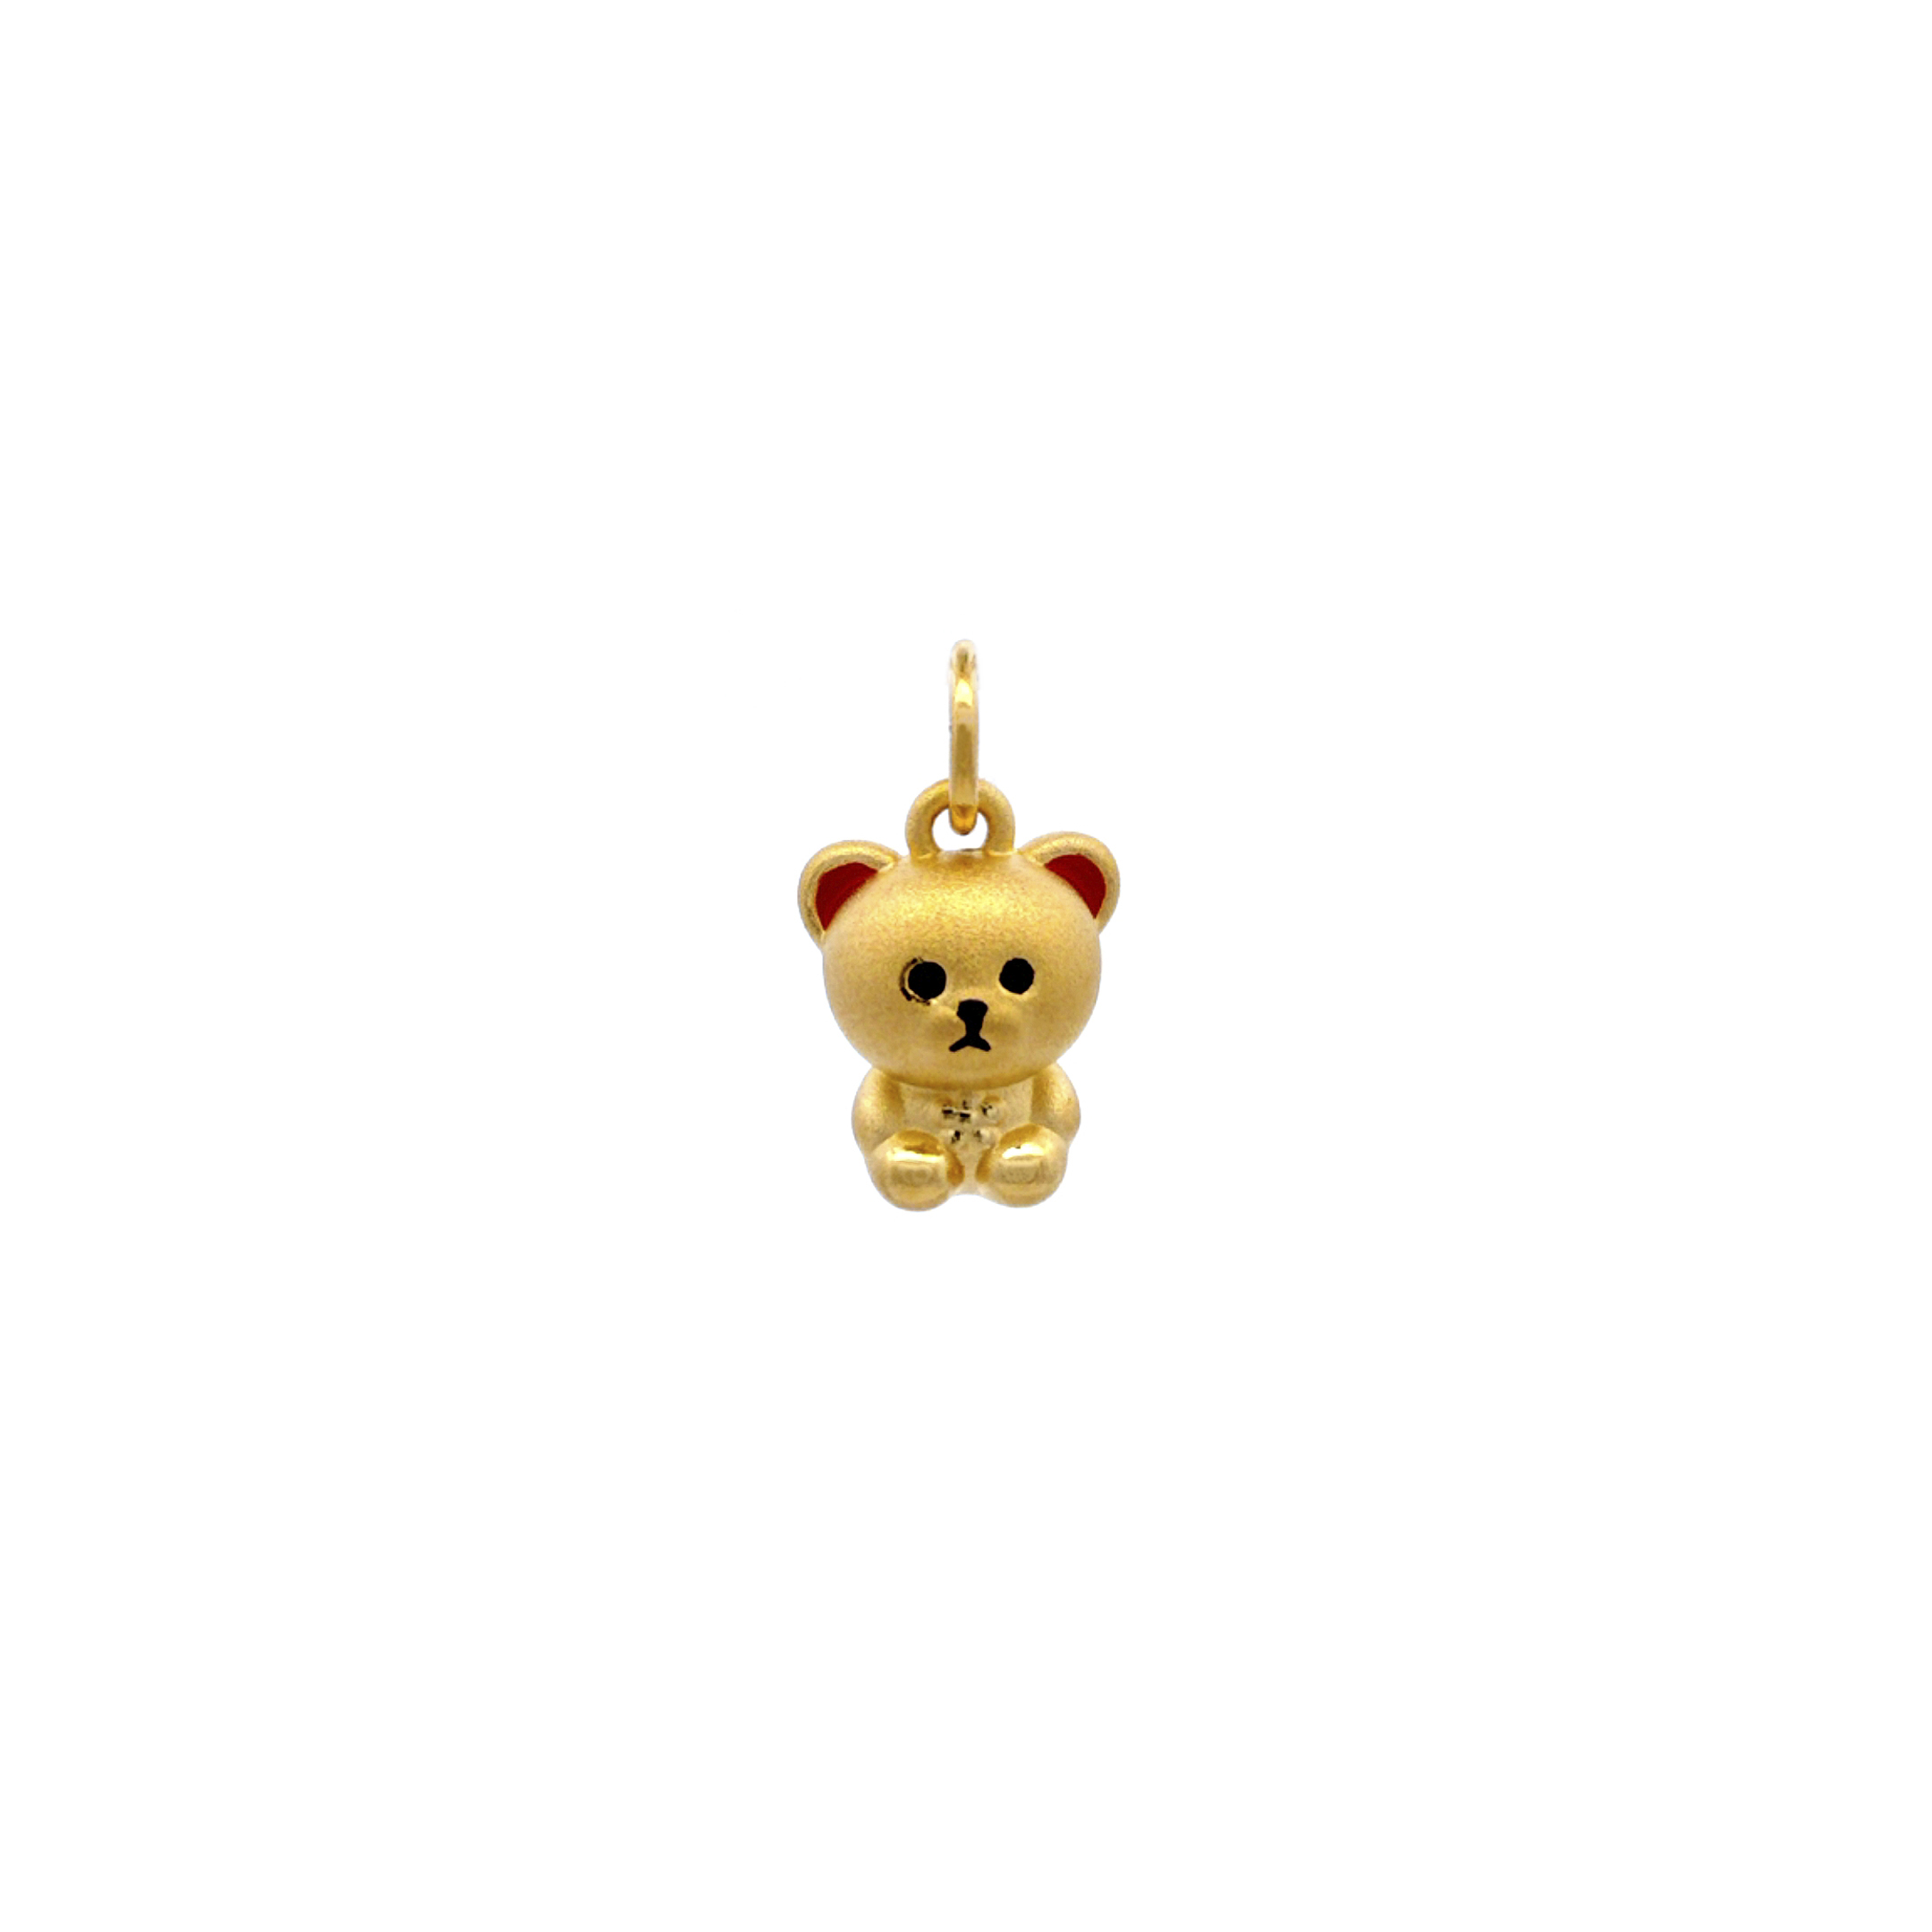 TIANSI 999 (24K) Gold Bear Pendant